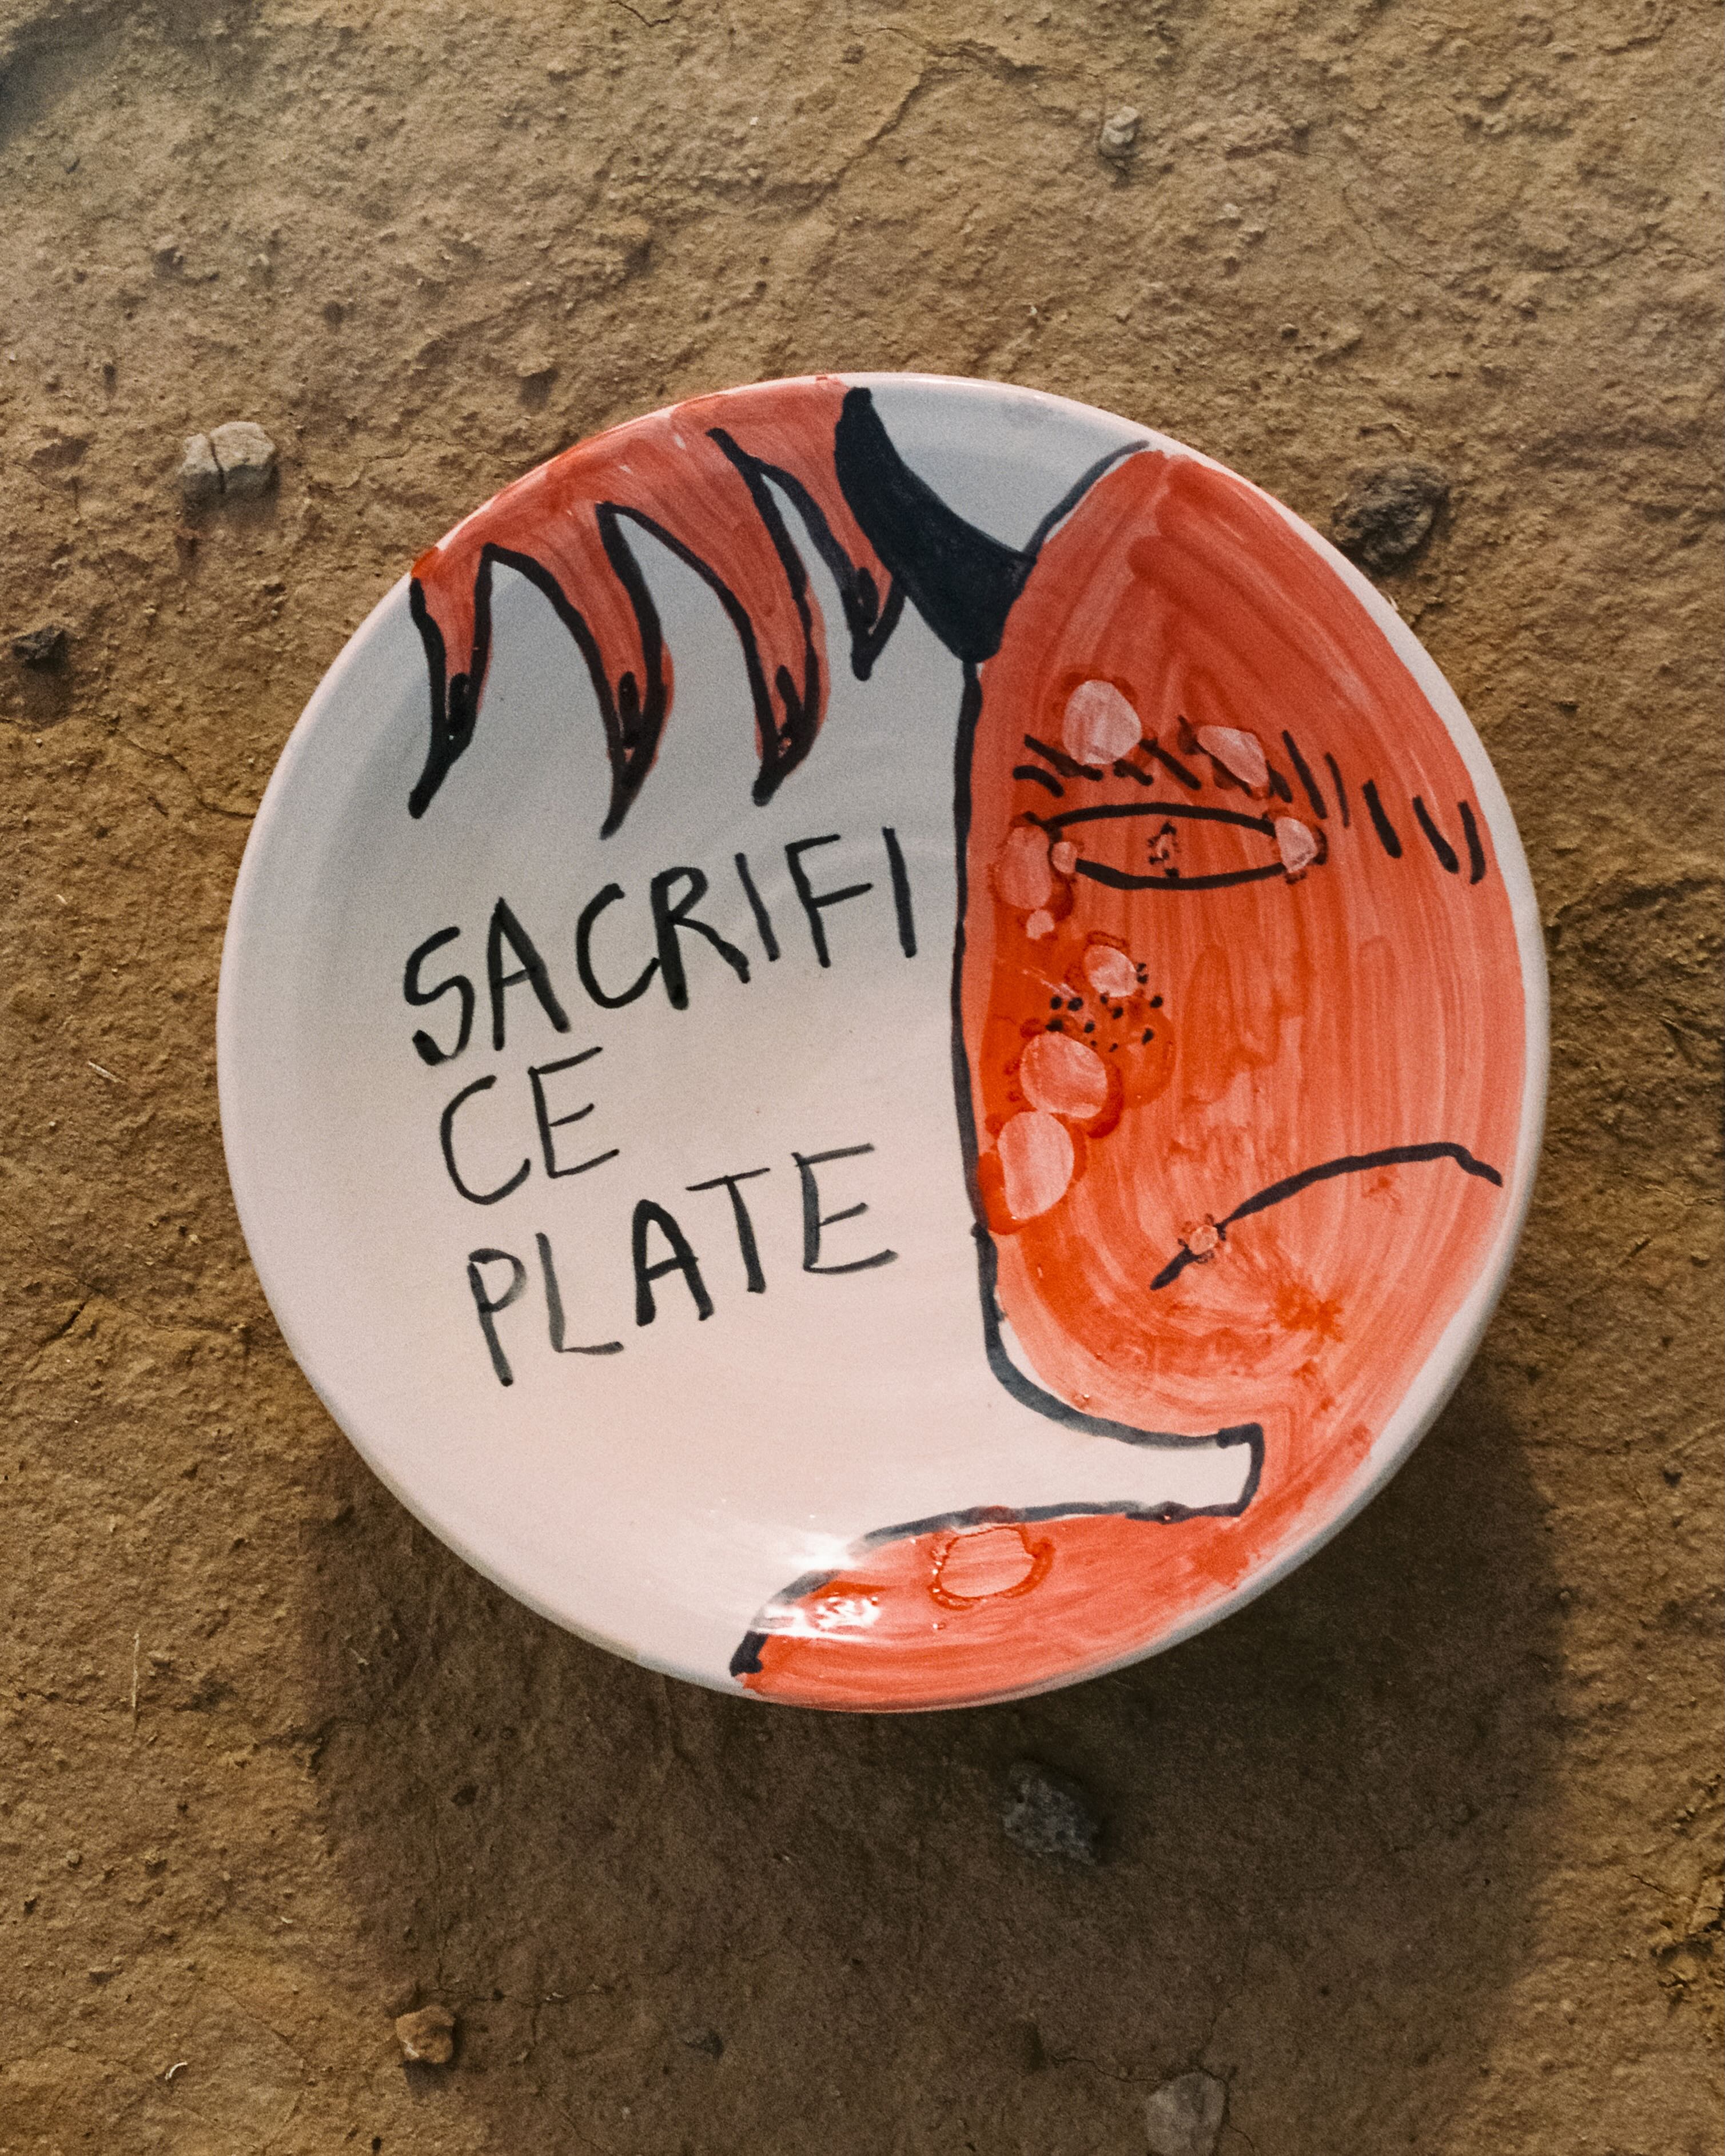 "Sacrifice plate" big platter